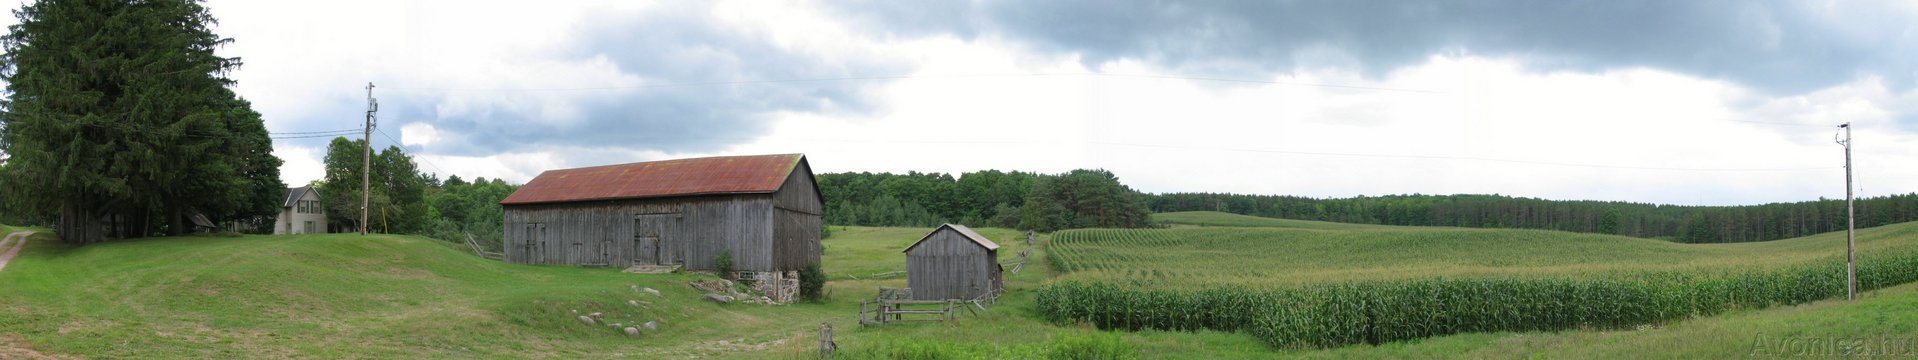 King farm barn 